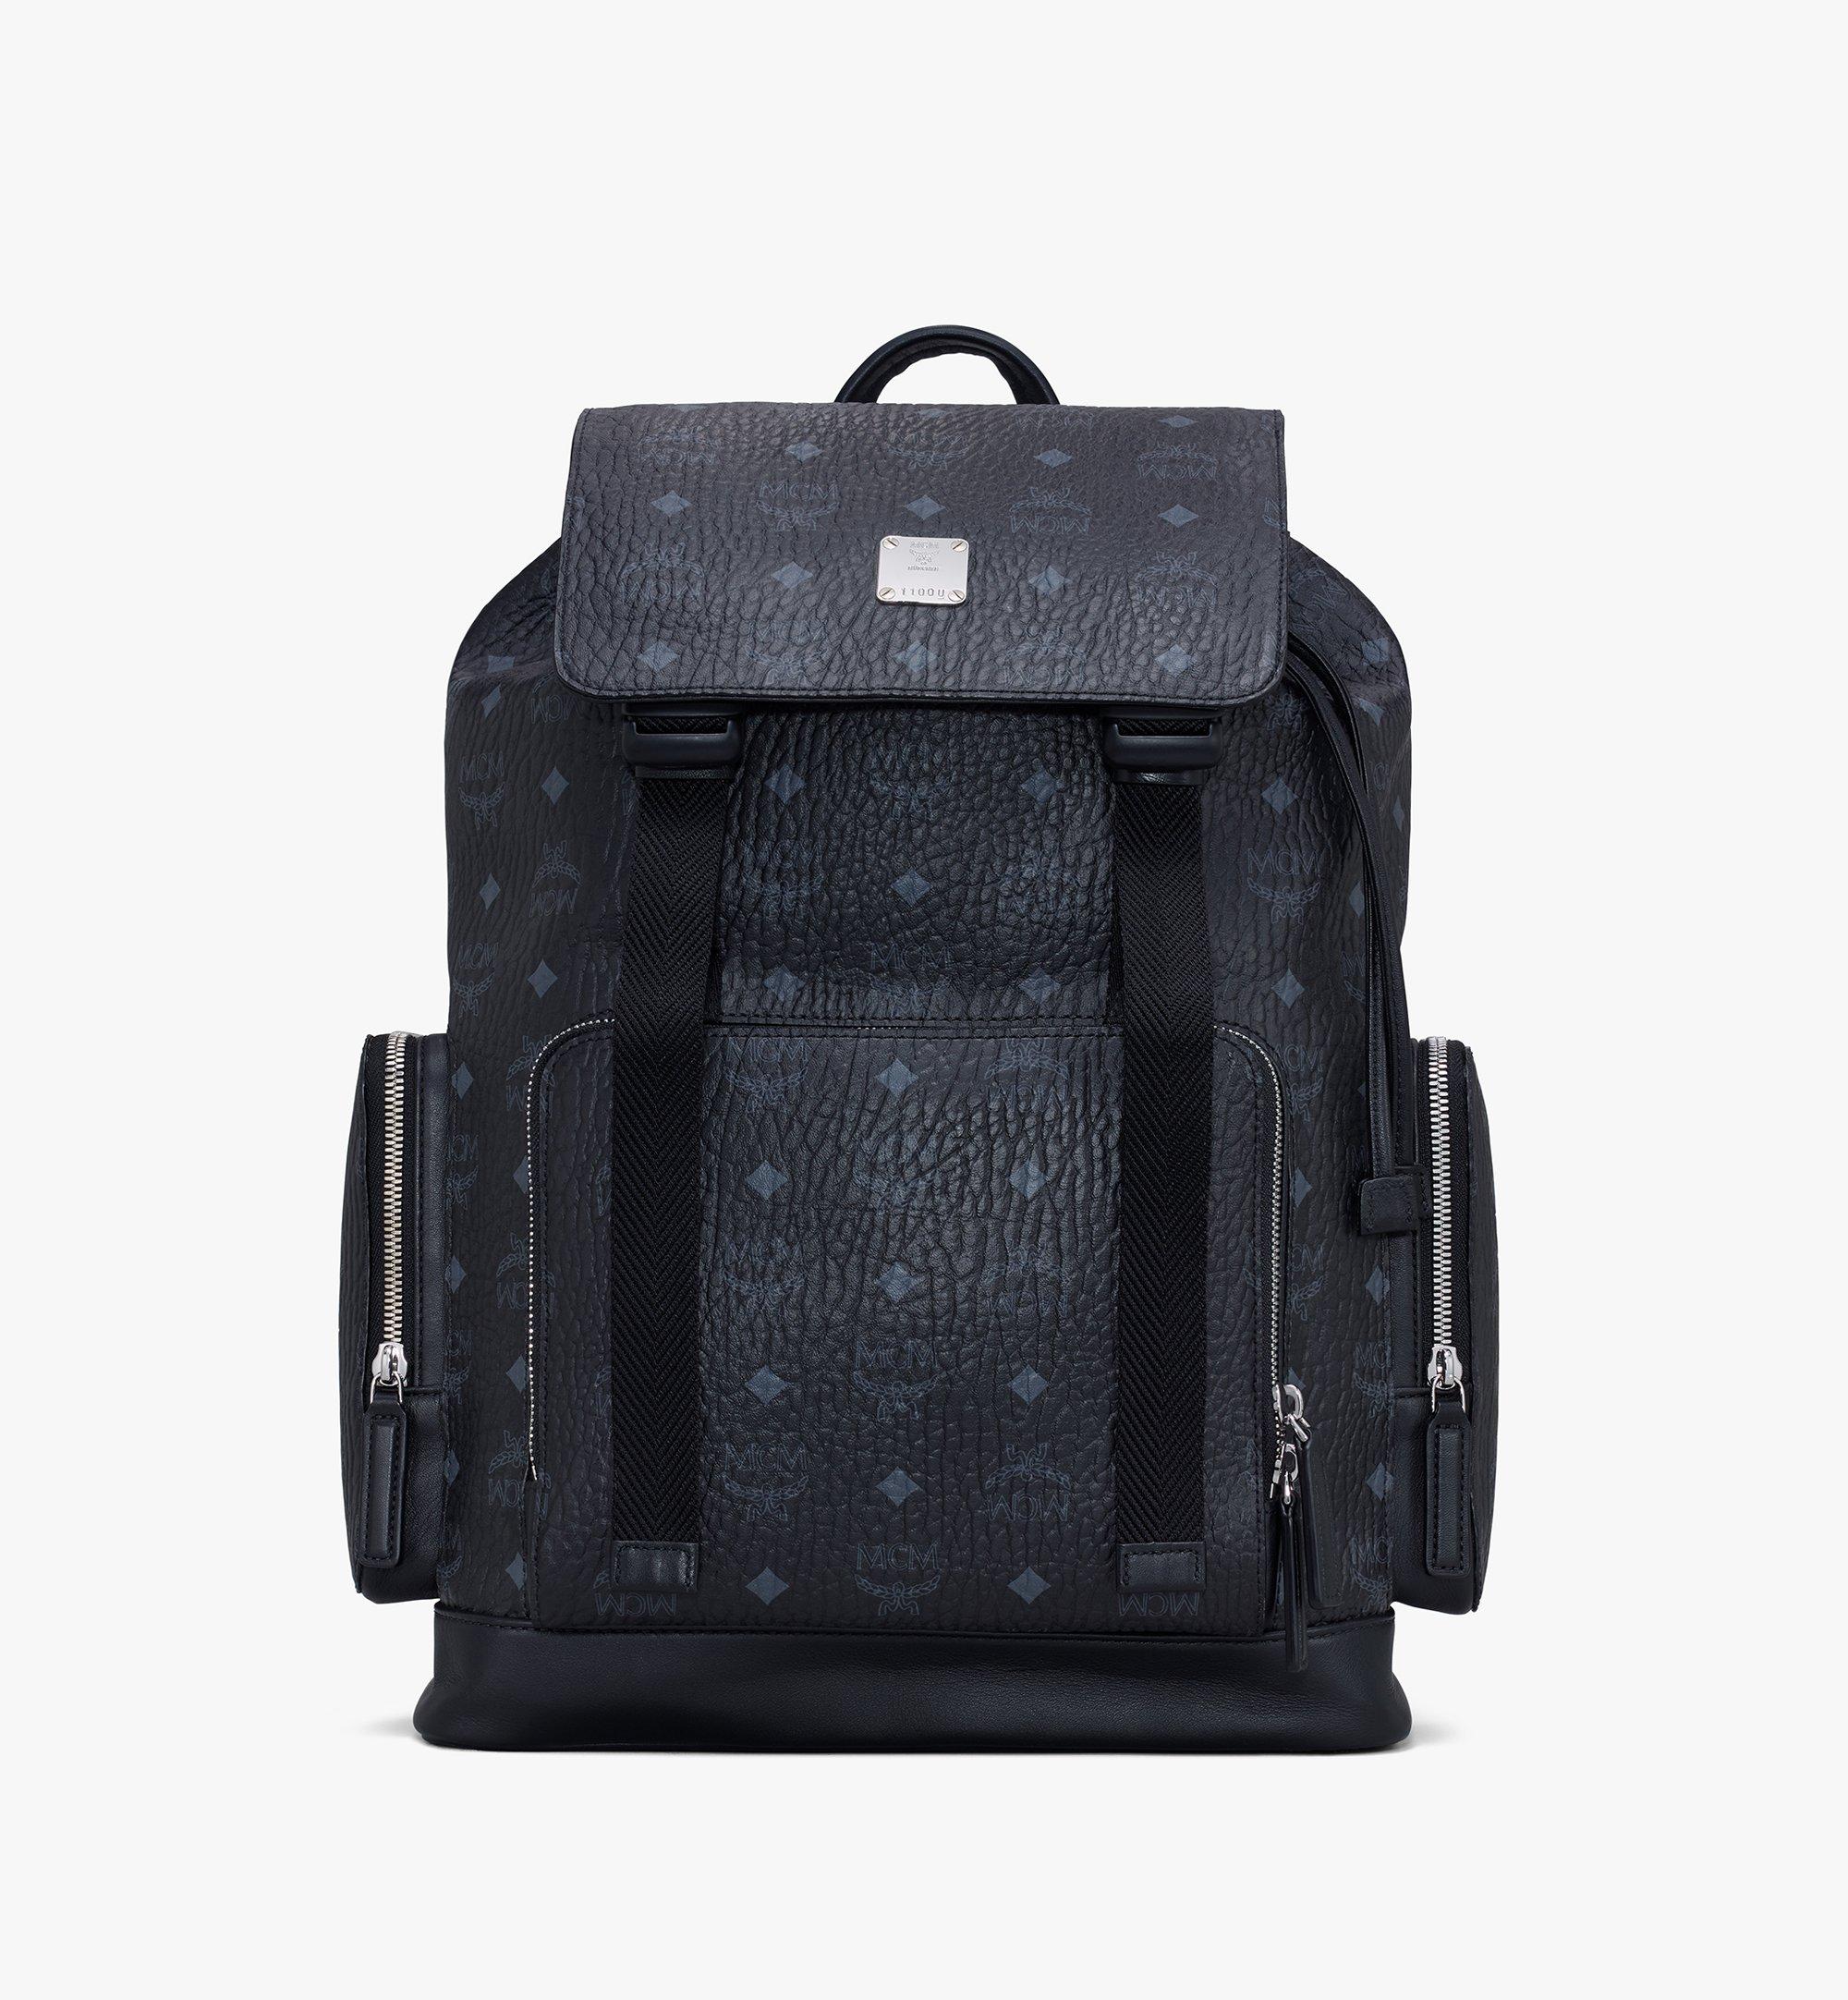 mcm backpack black